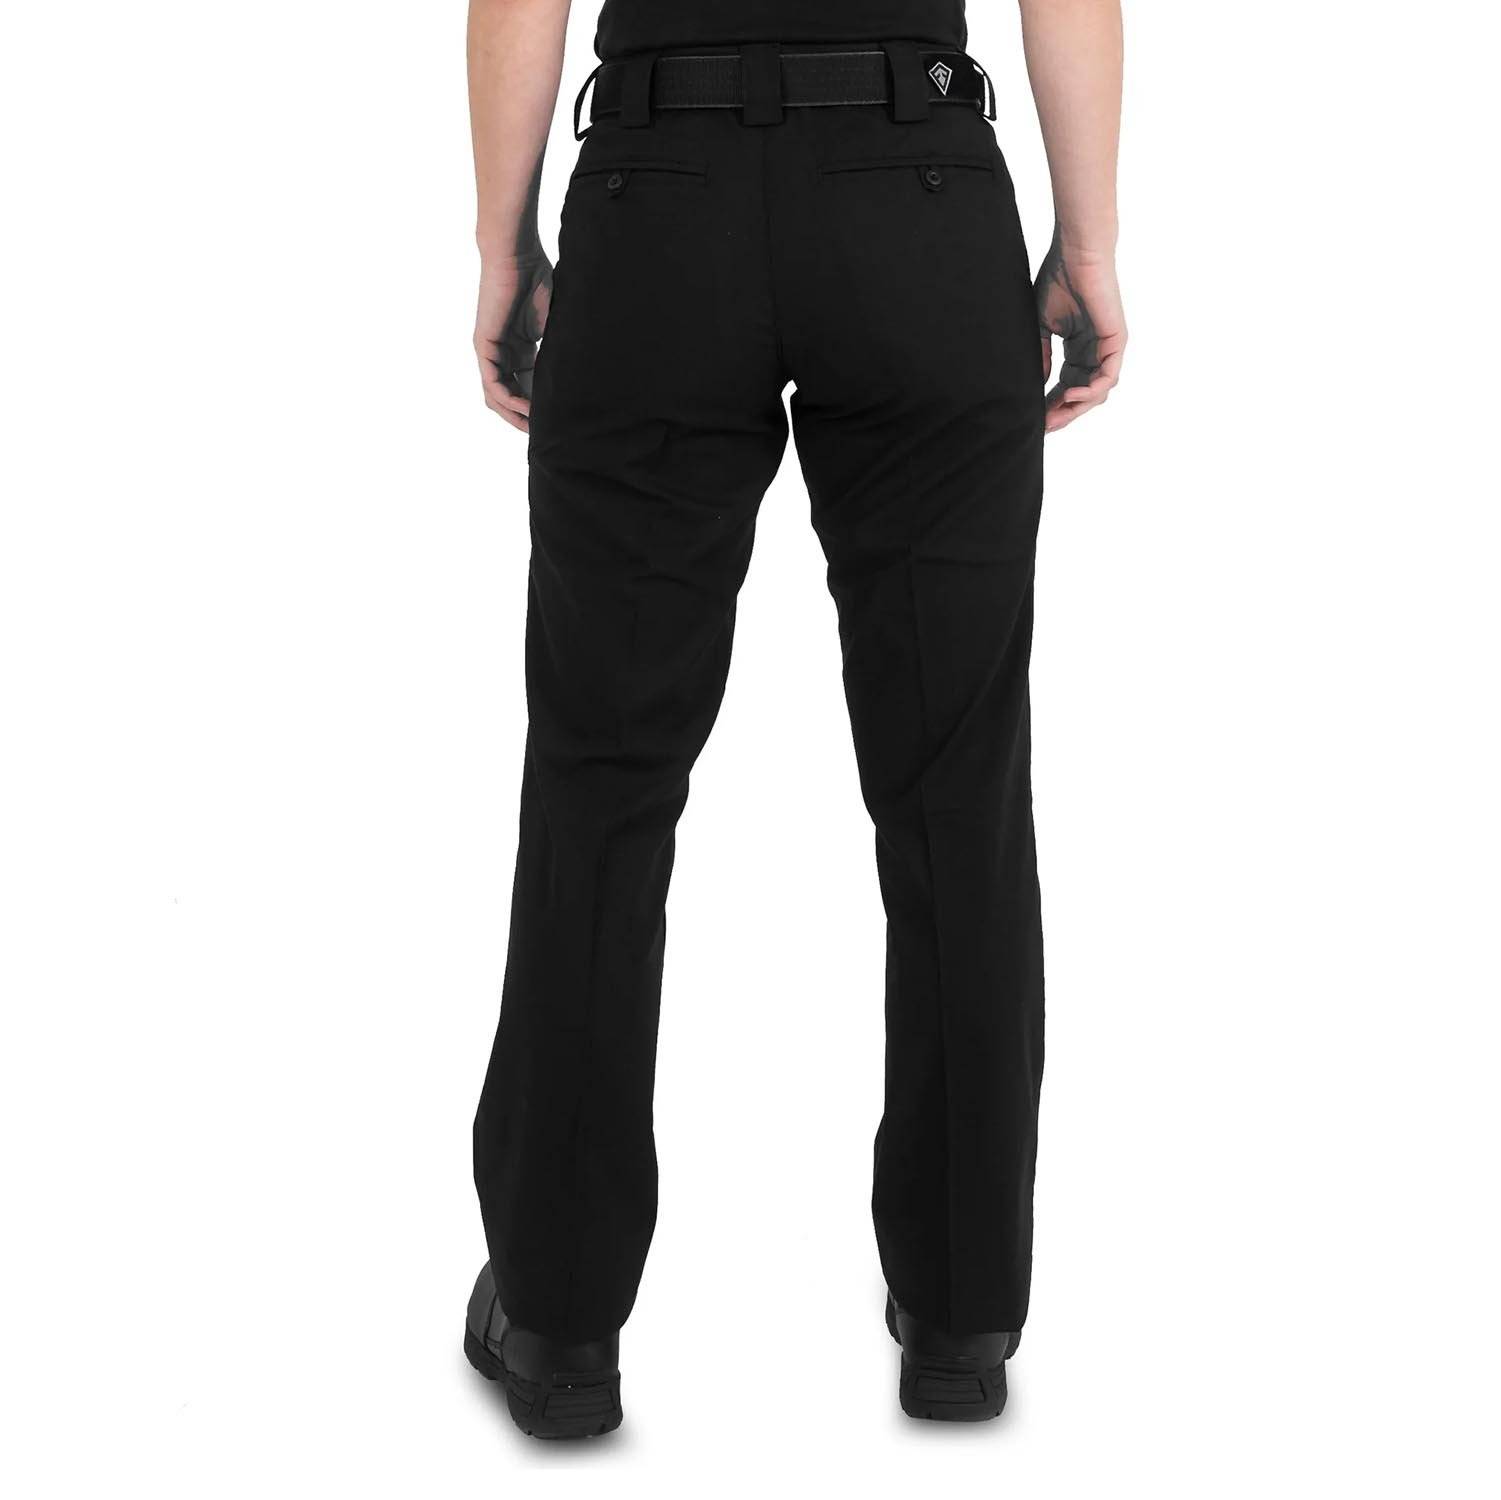 First Tactical Women's V2 Pro Duty Uniform Pants | Galls